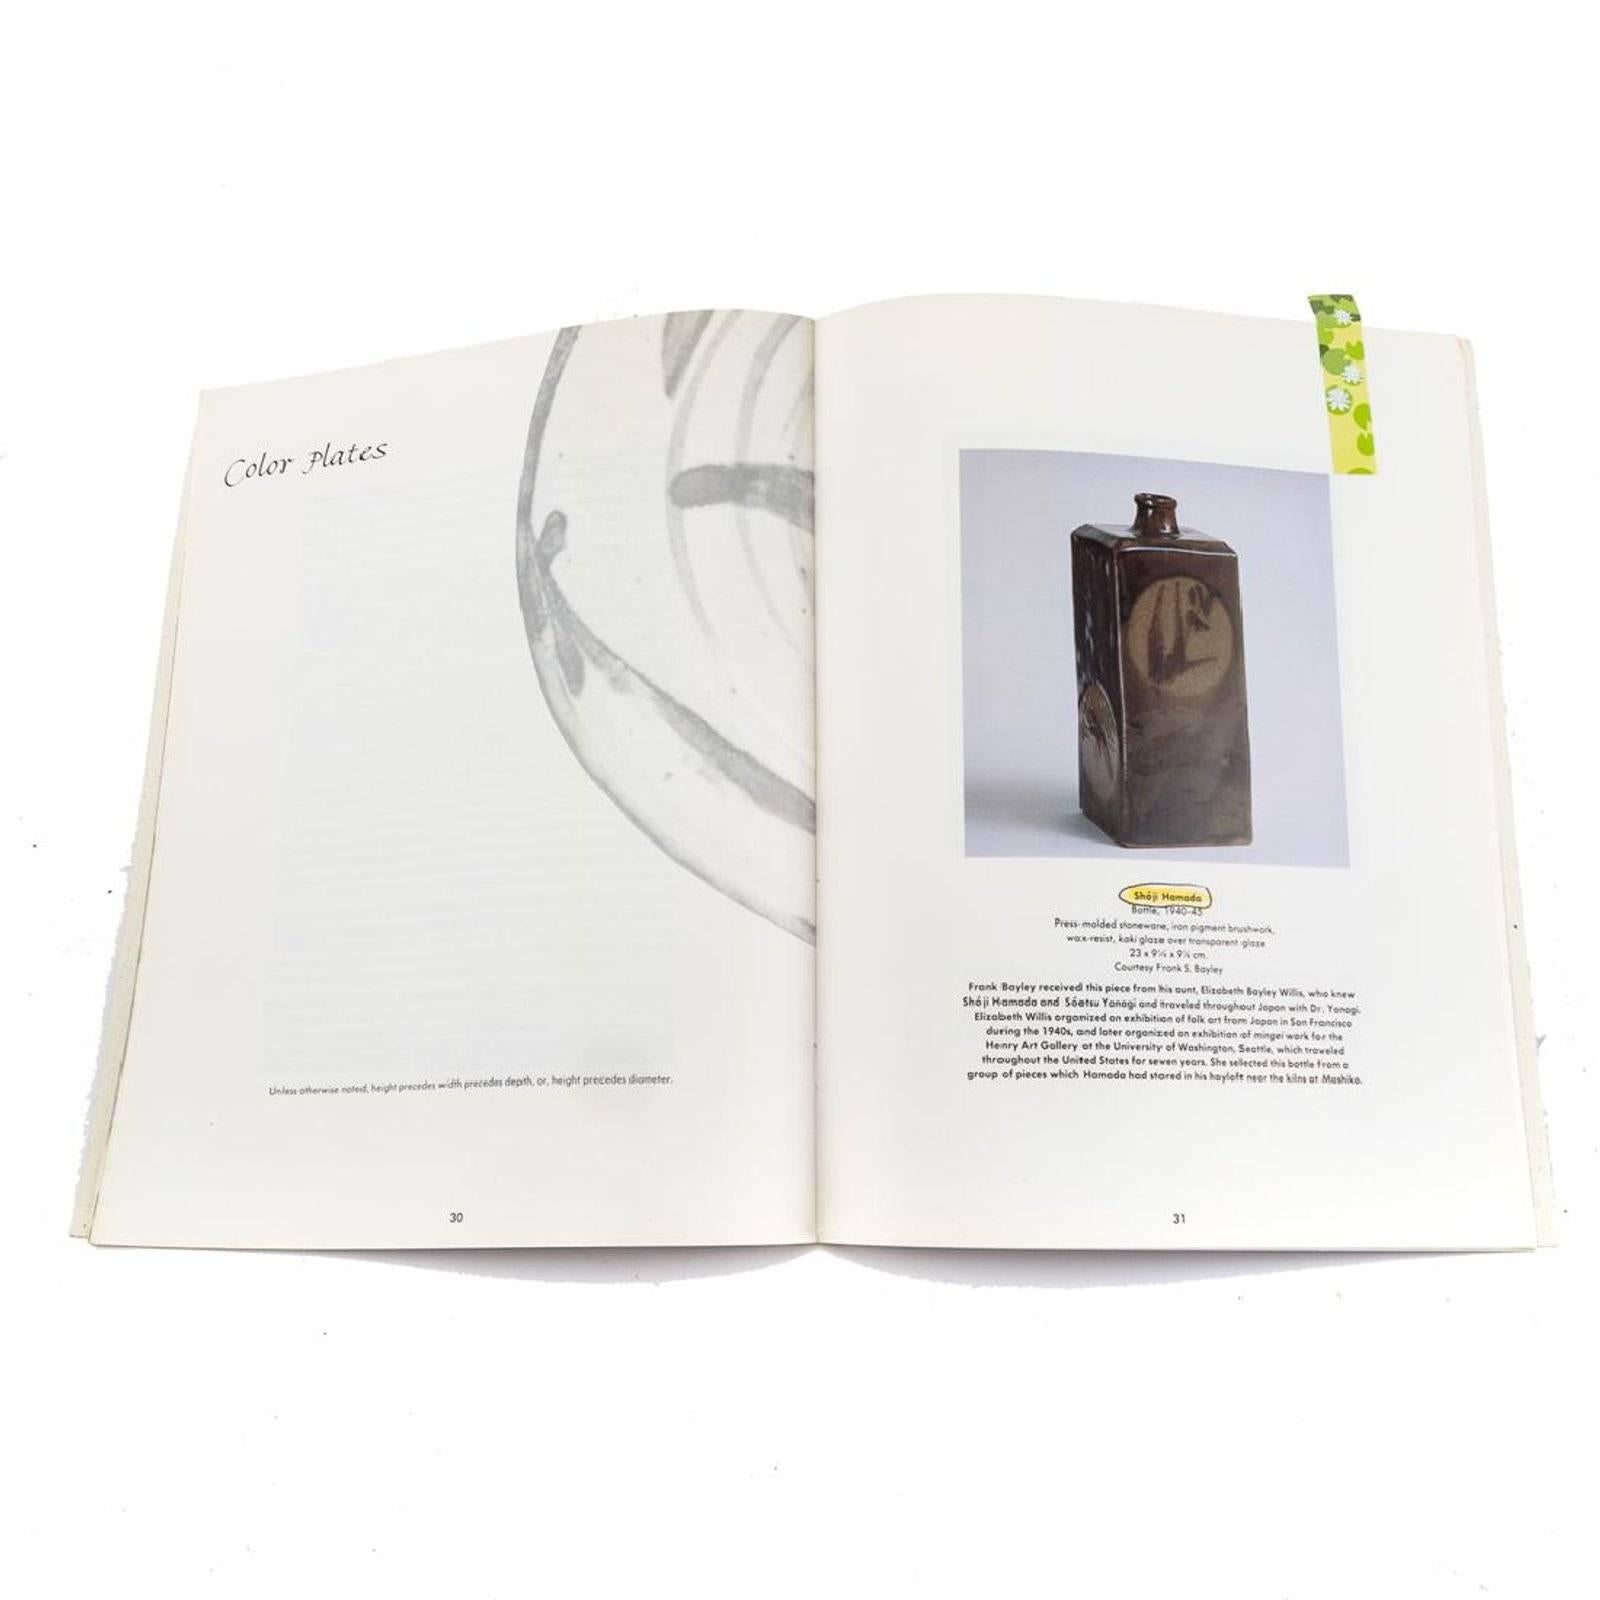 Artist: Shoji Hamada 
Title: BOttle
Medium: Stoneware, Iron Pigment Brushwork, Wax Resist, Kaki Glaze over Transparent Glaze 
Size: 23 x 9.25 x 9.25 cm
Size: 9.05 x 3.64 x 3.64 inches
Year: 1940-1945
Edition: Unique
Provenance: Collection of Frank